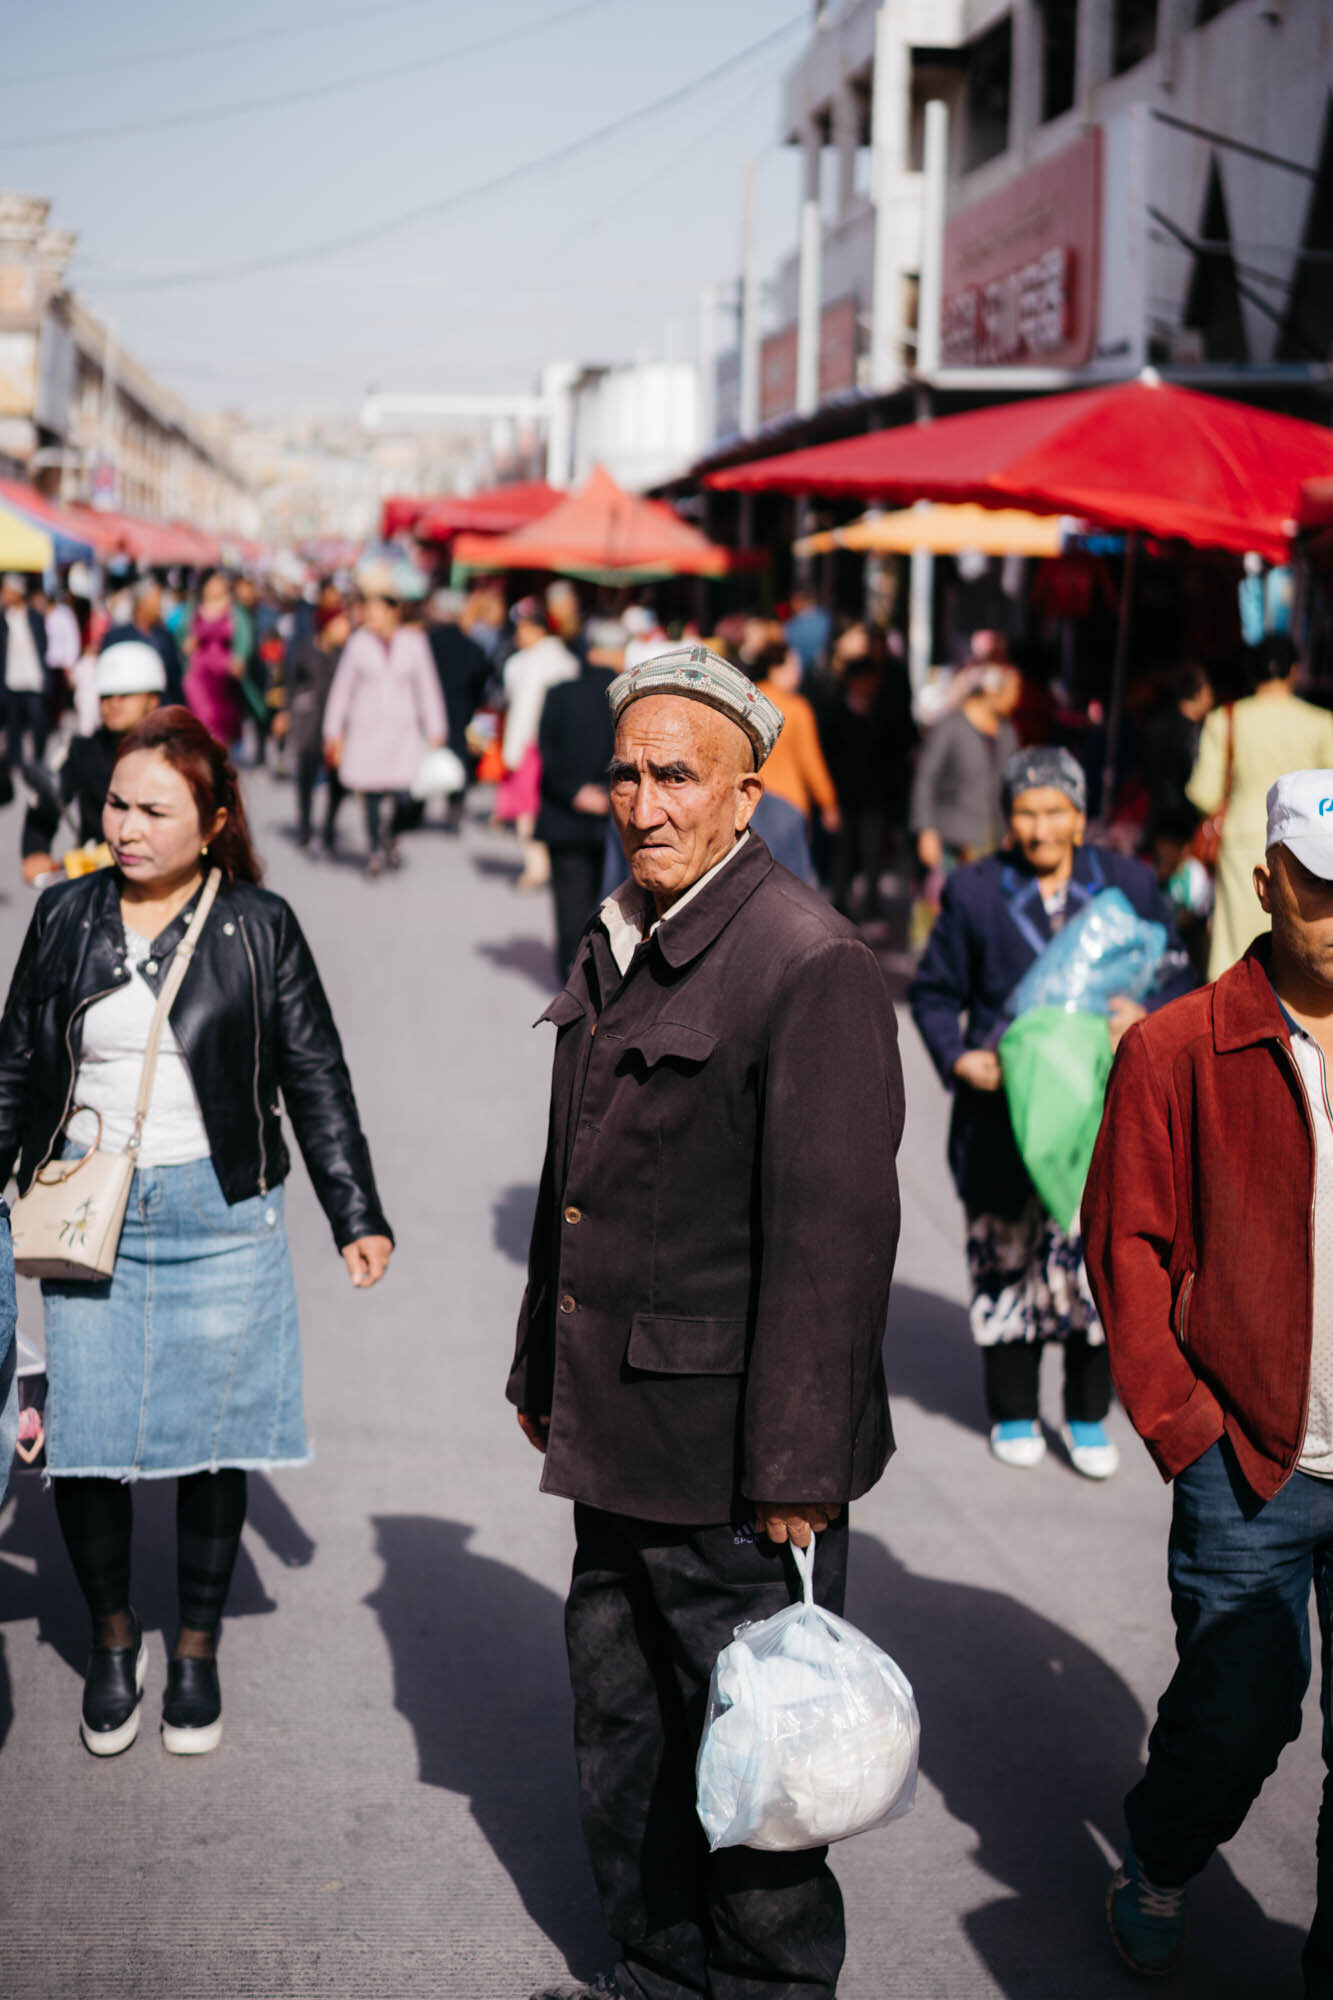  A Uyghur man at the bazaar 